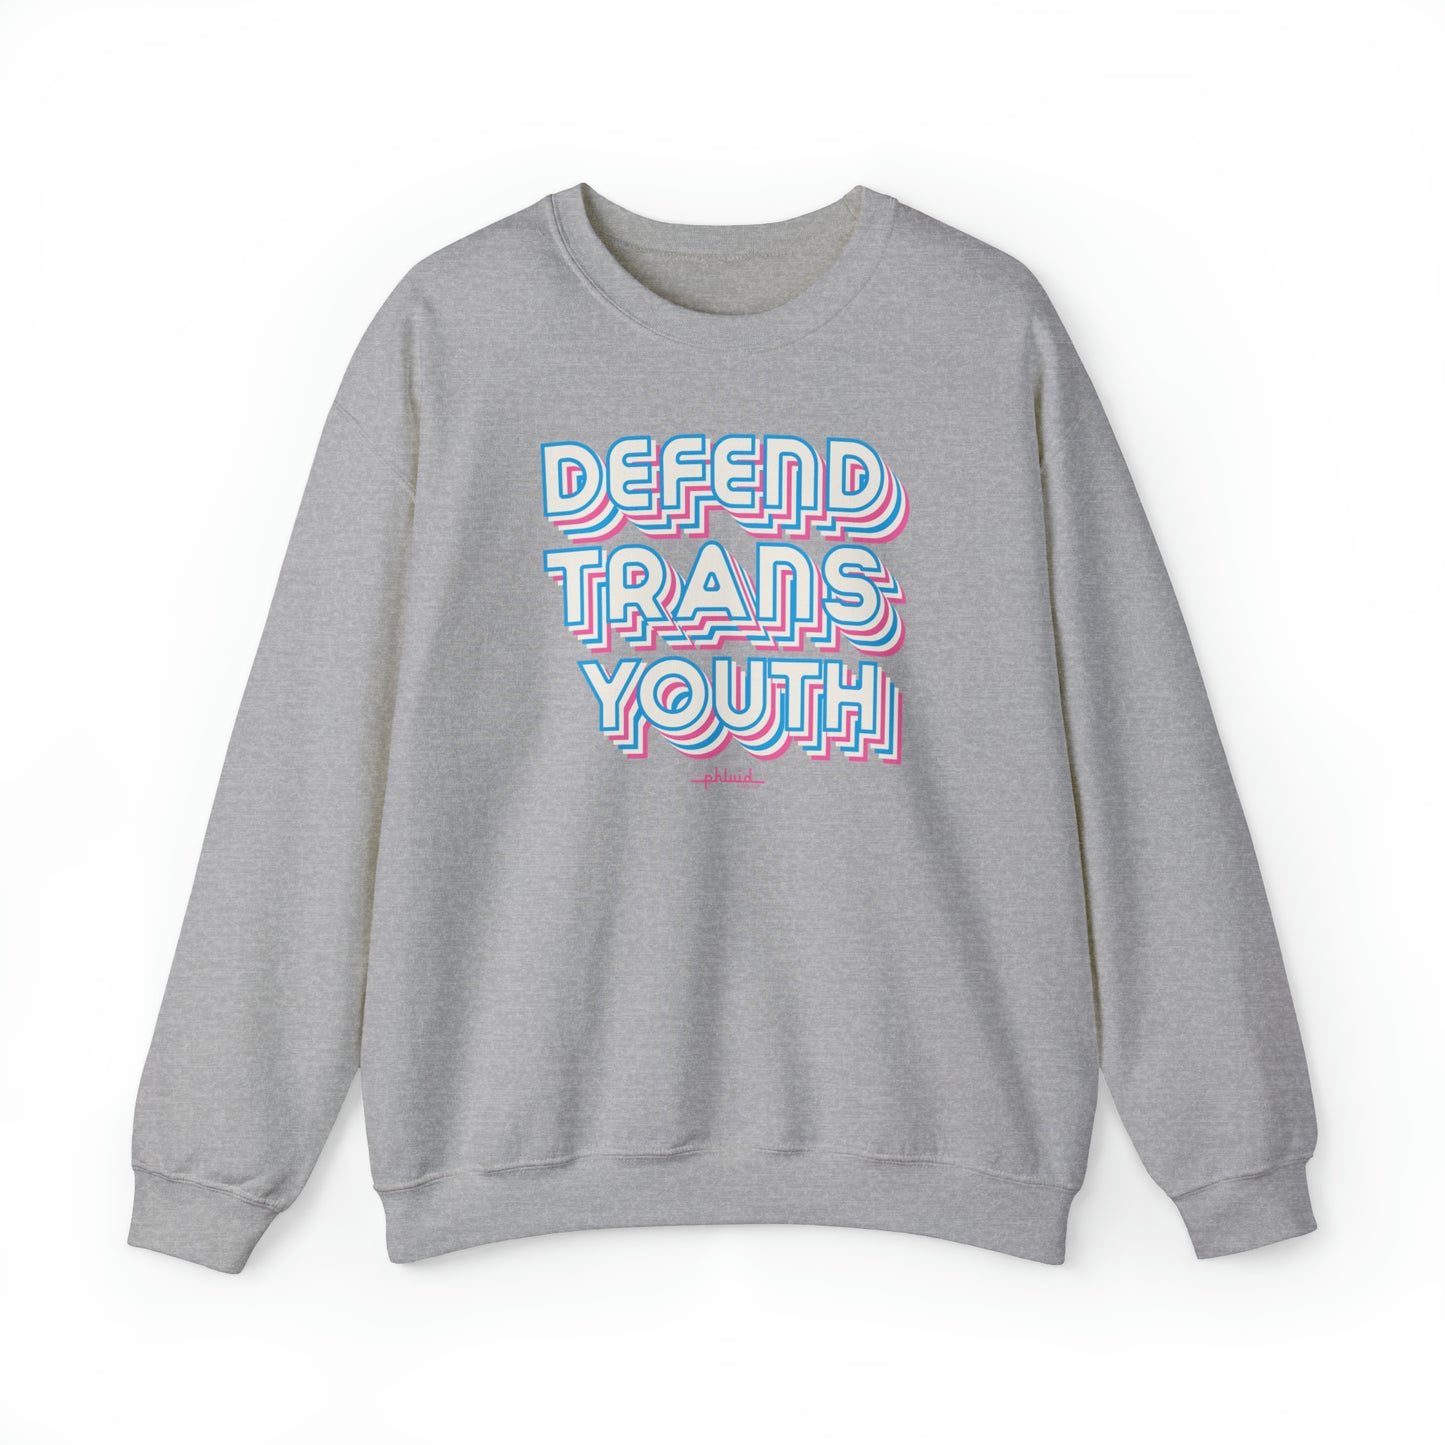 Defend  Trans Youth Crewneck Sweatshirt